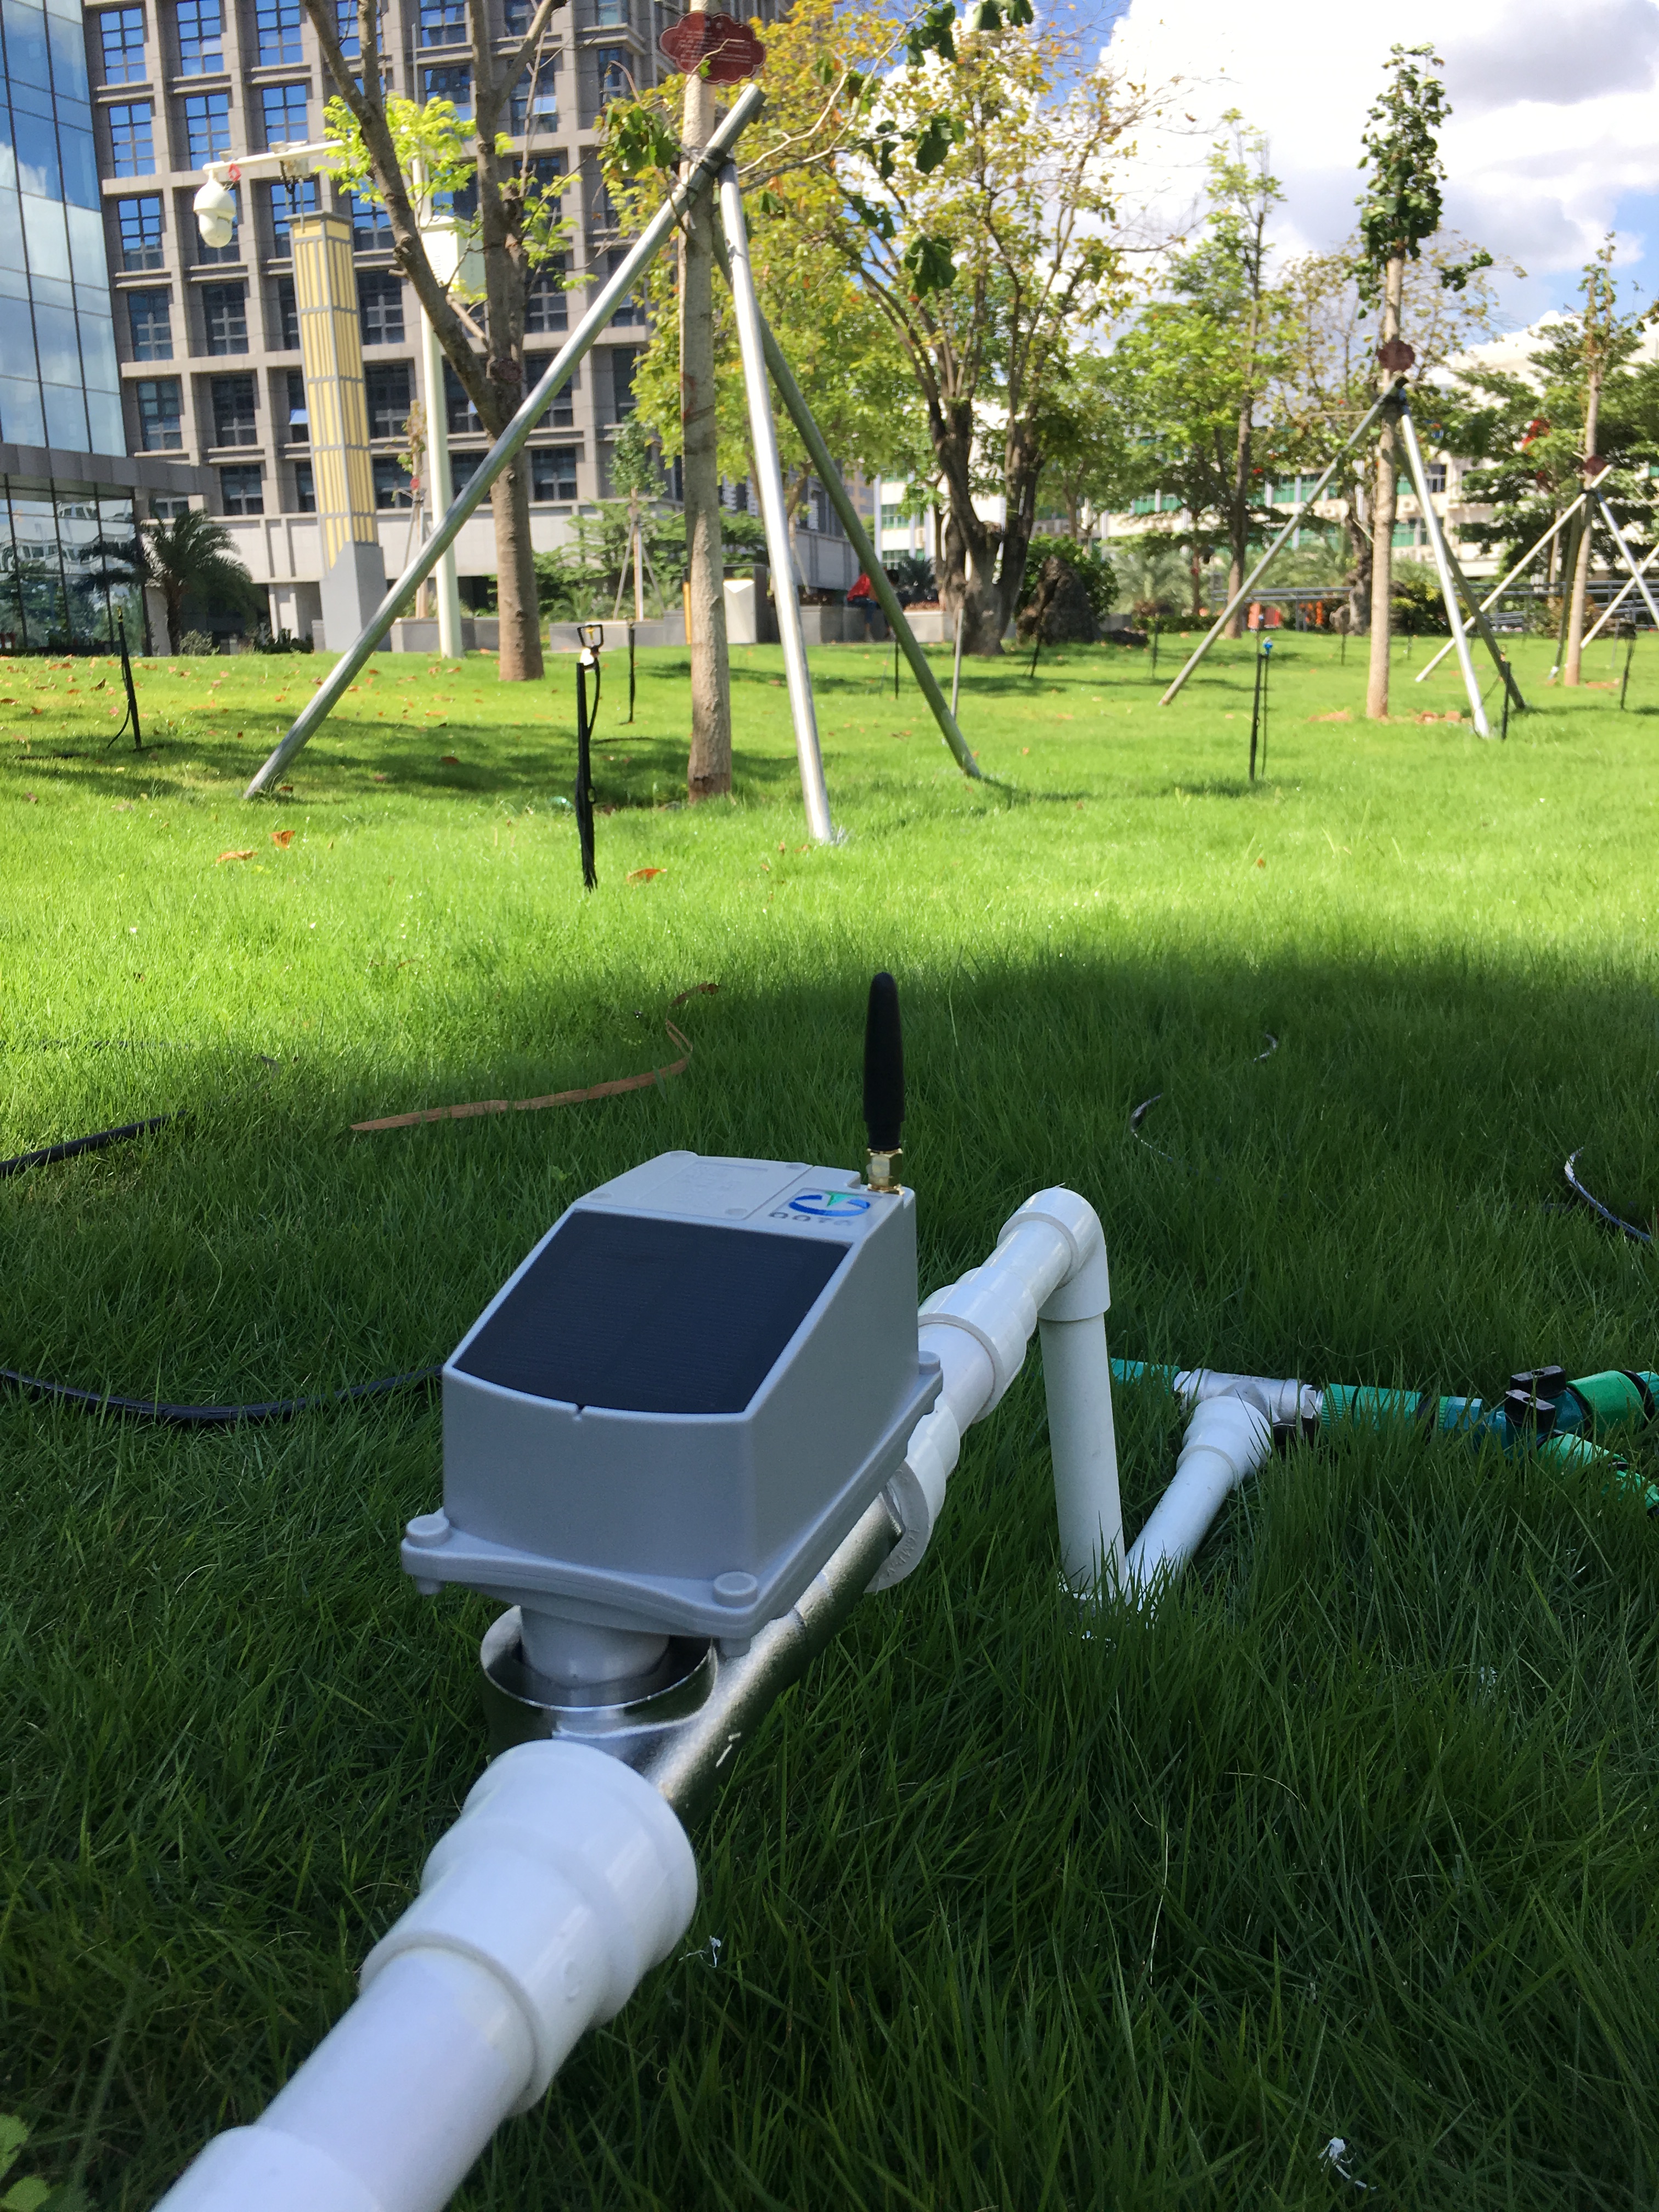 Solar Powered Smart Water Valve with Long Range Wireless Lora-Enabled Sensors